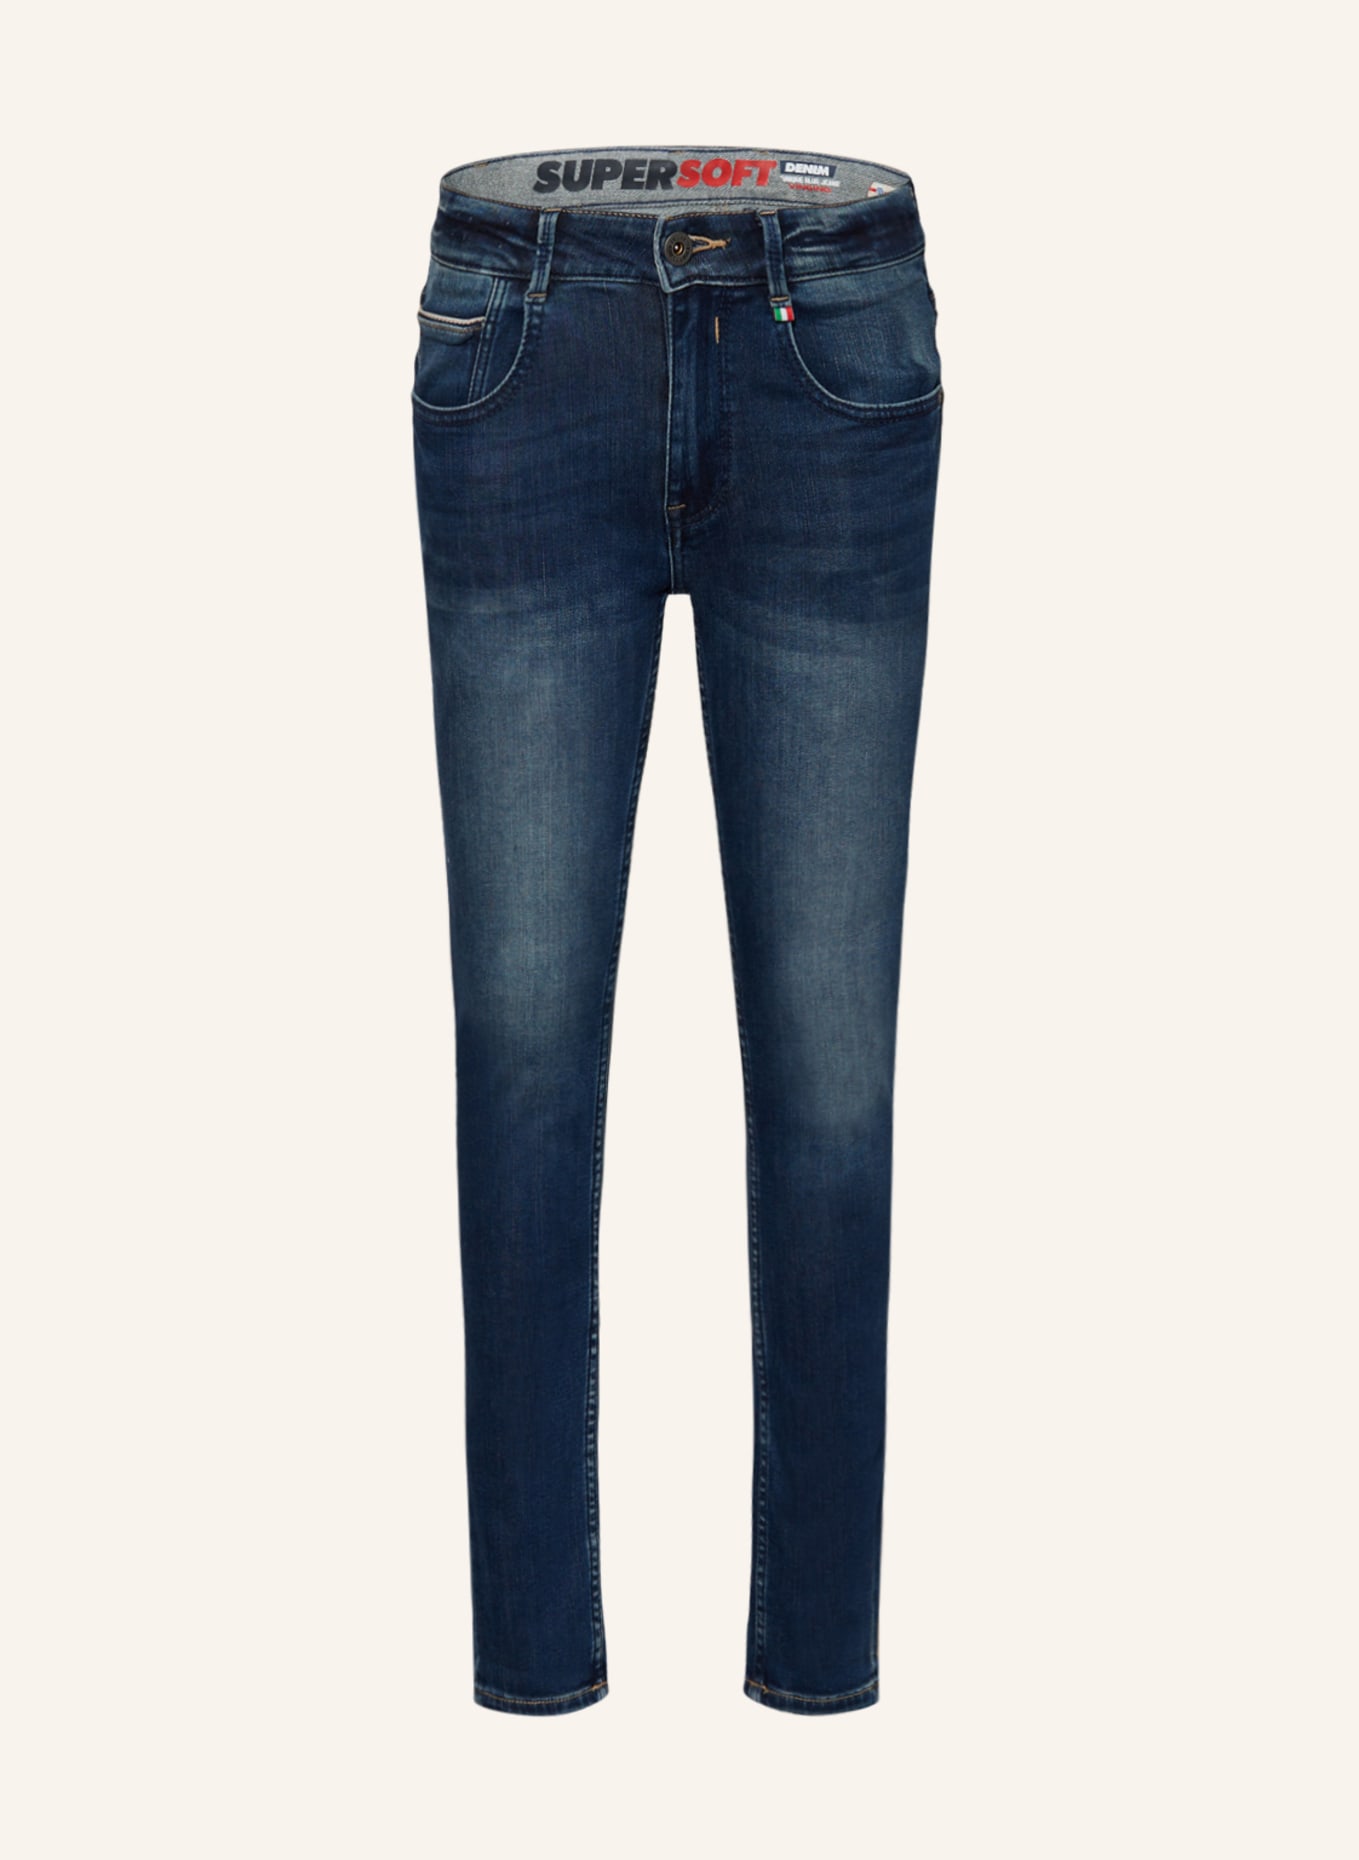 VINGINO Jeans AMOS Skinny Fit, Farbe: Deep Dark (Bild 1)